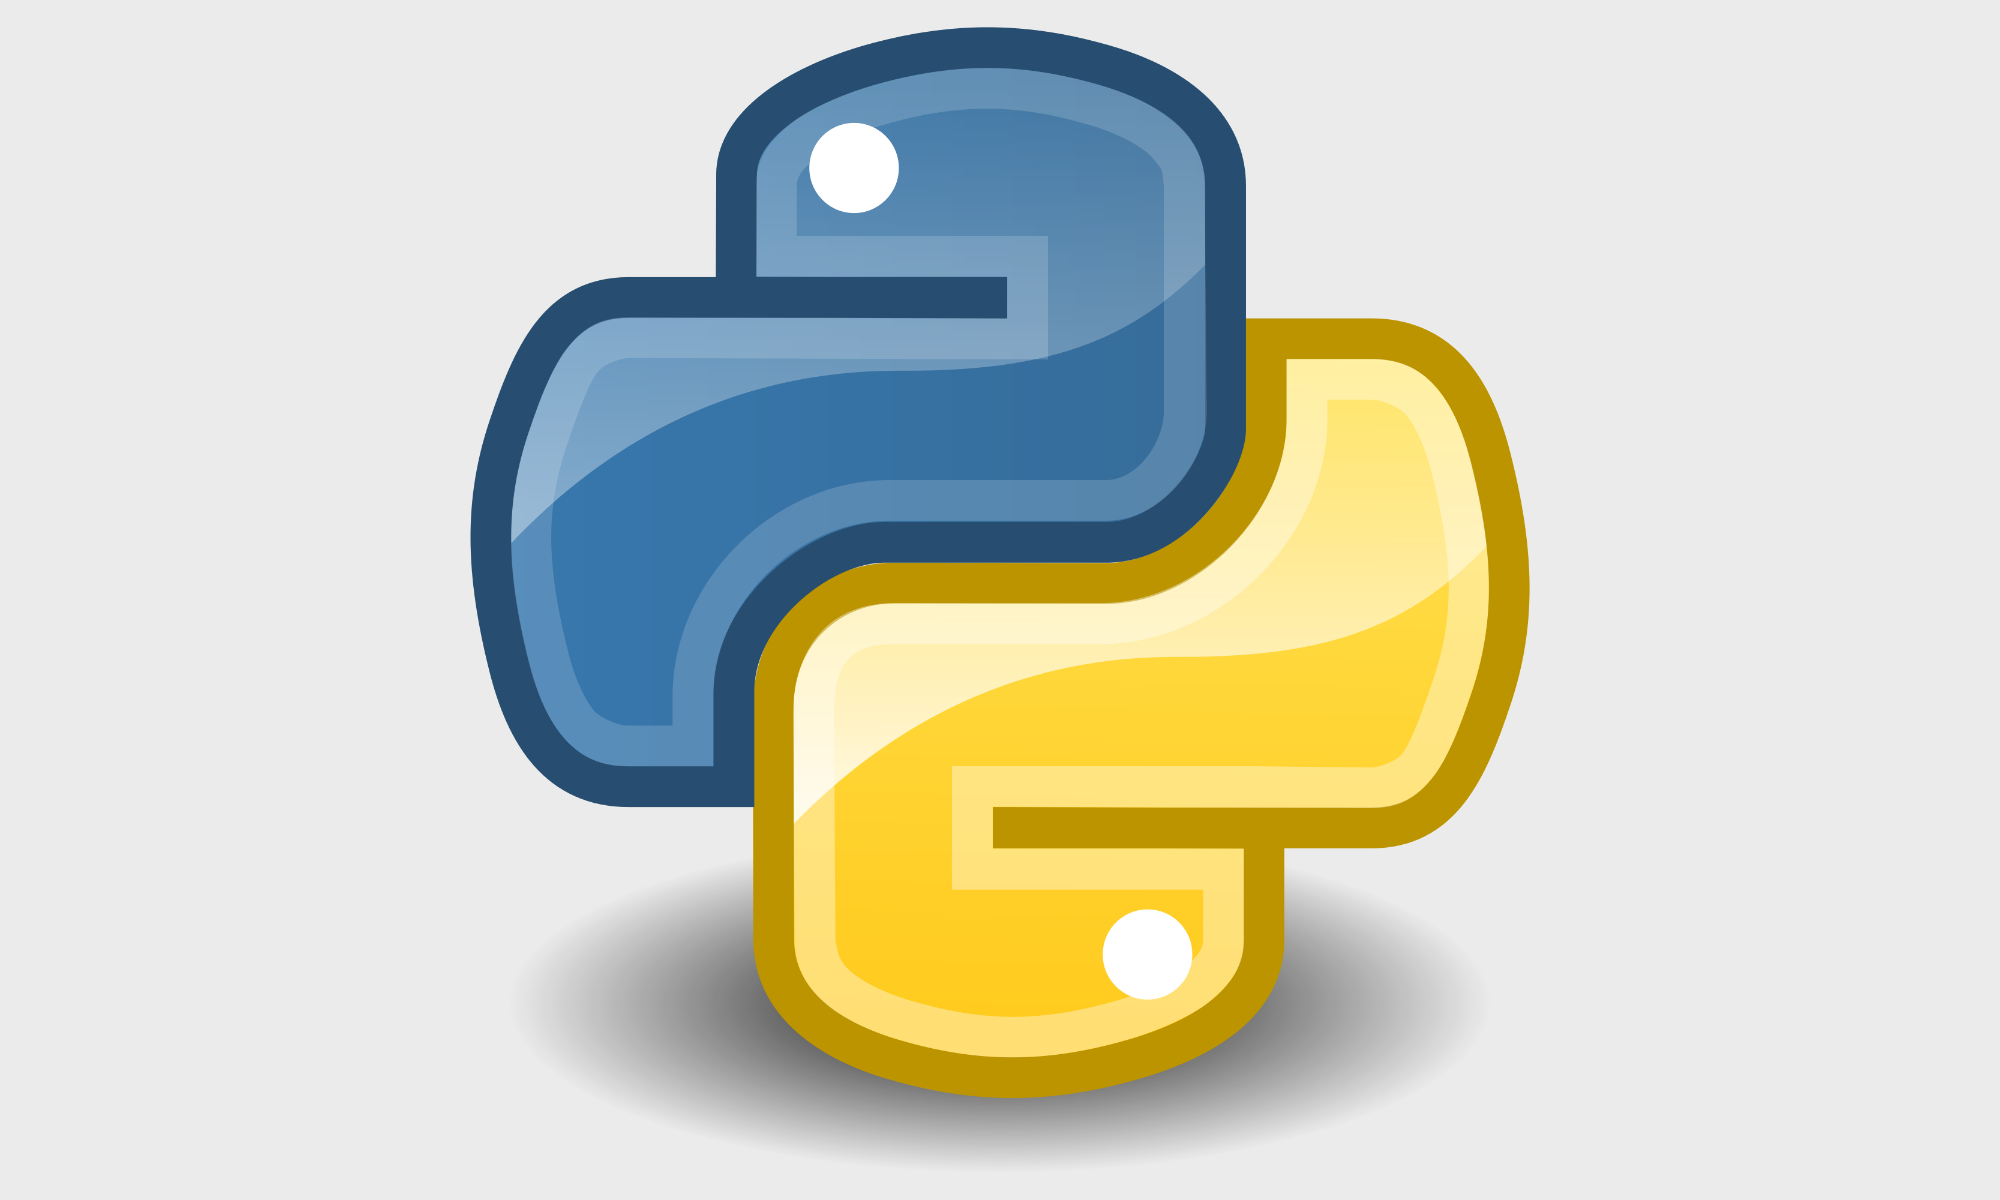 Python Cover Image